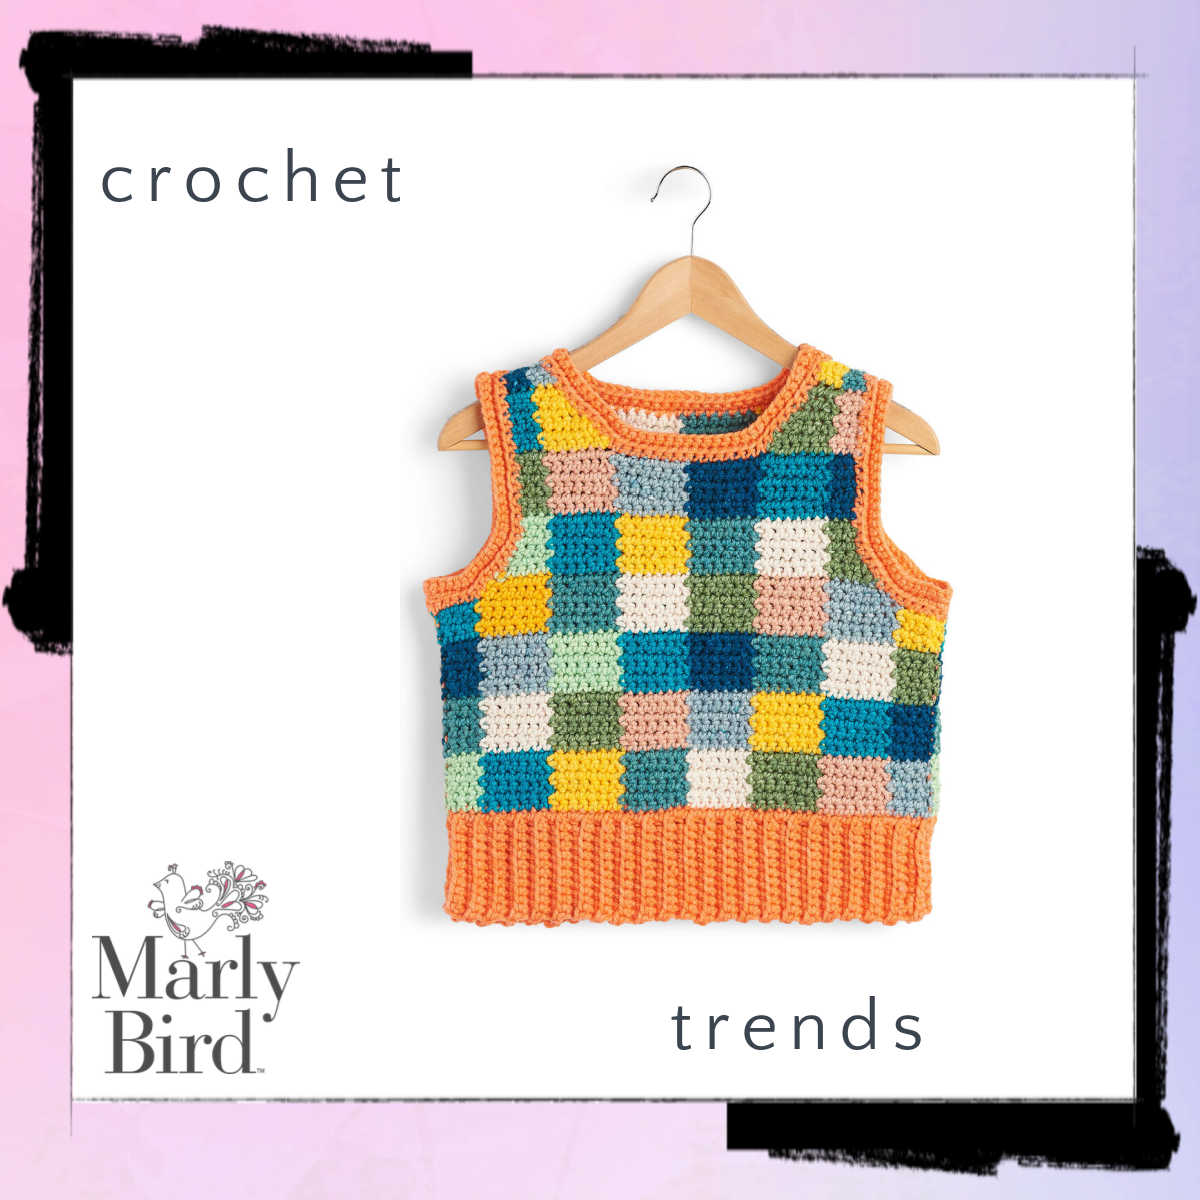 crochet trends - Marly Bird